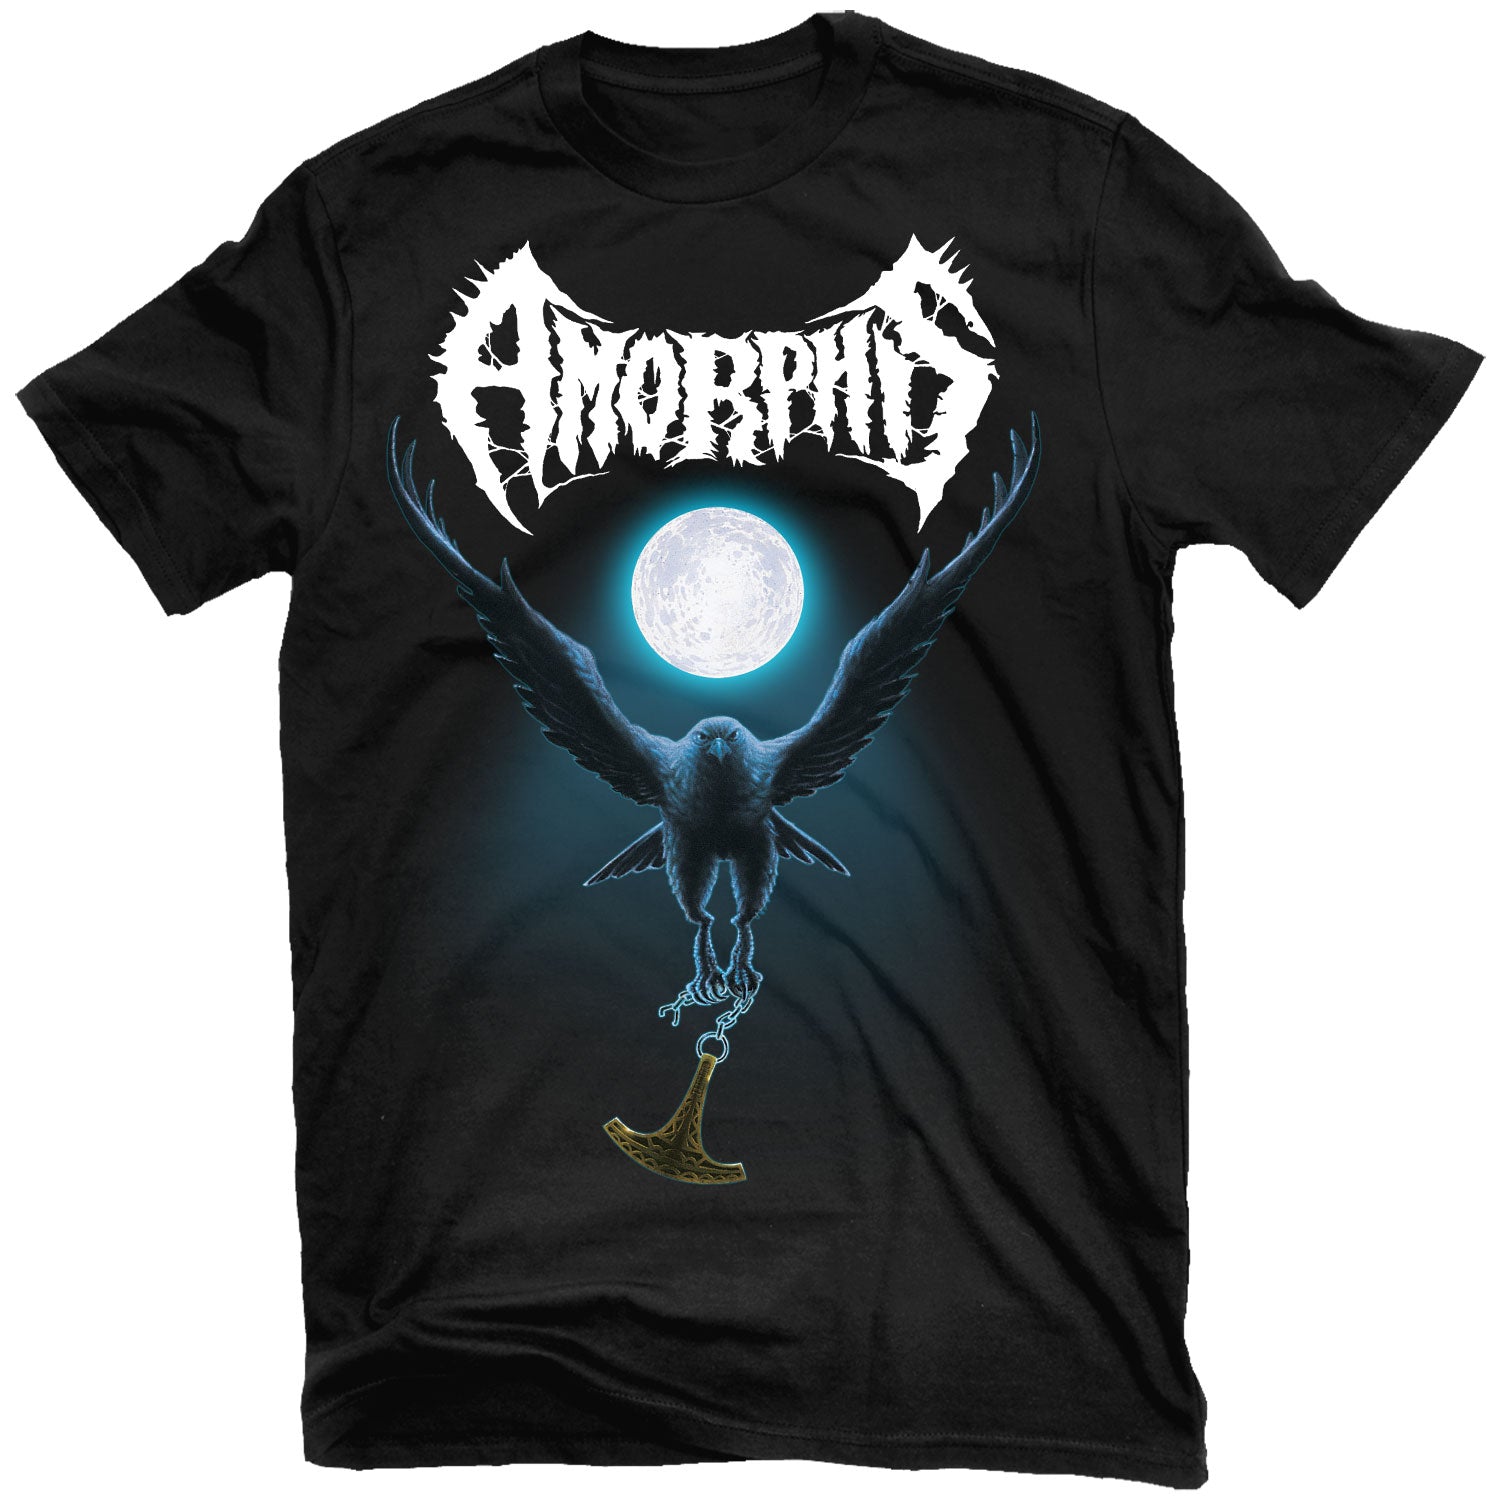 Amorphis "Black Winter Day" T-Shirt